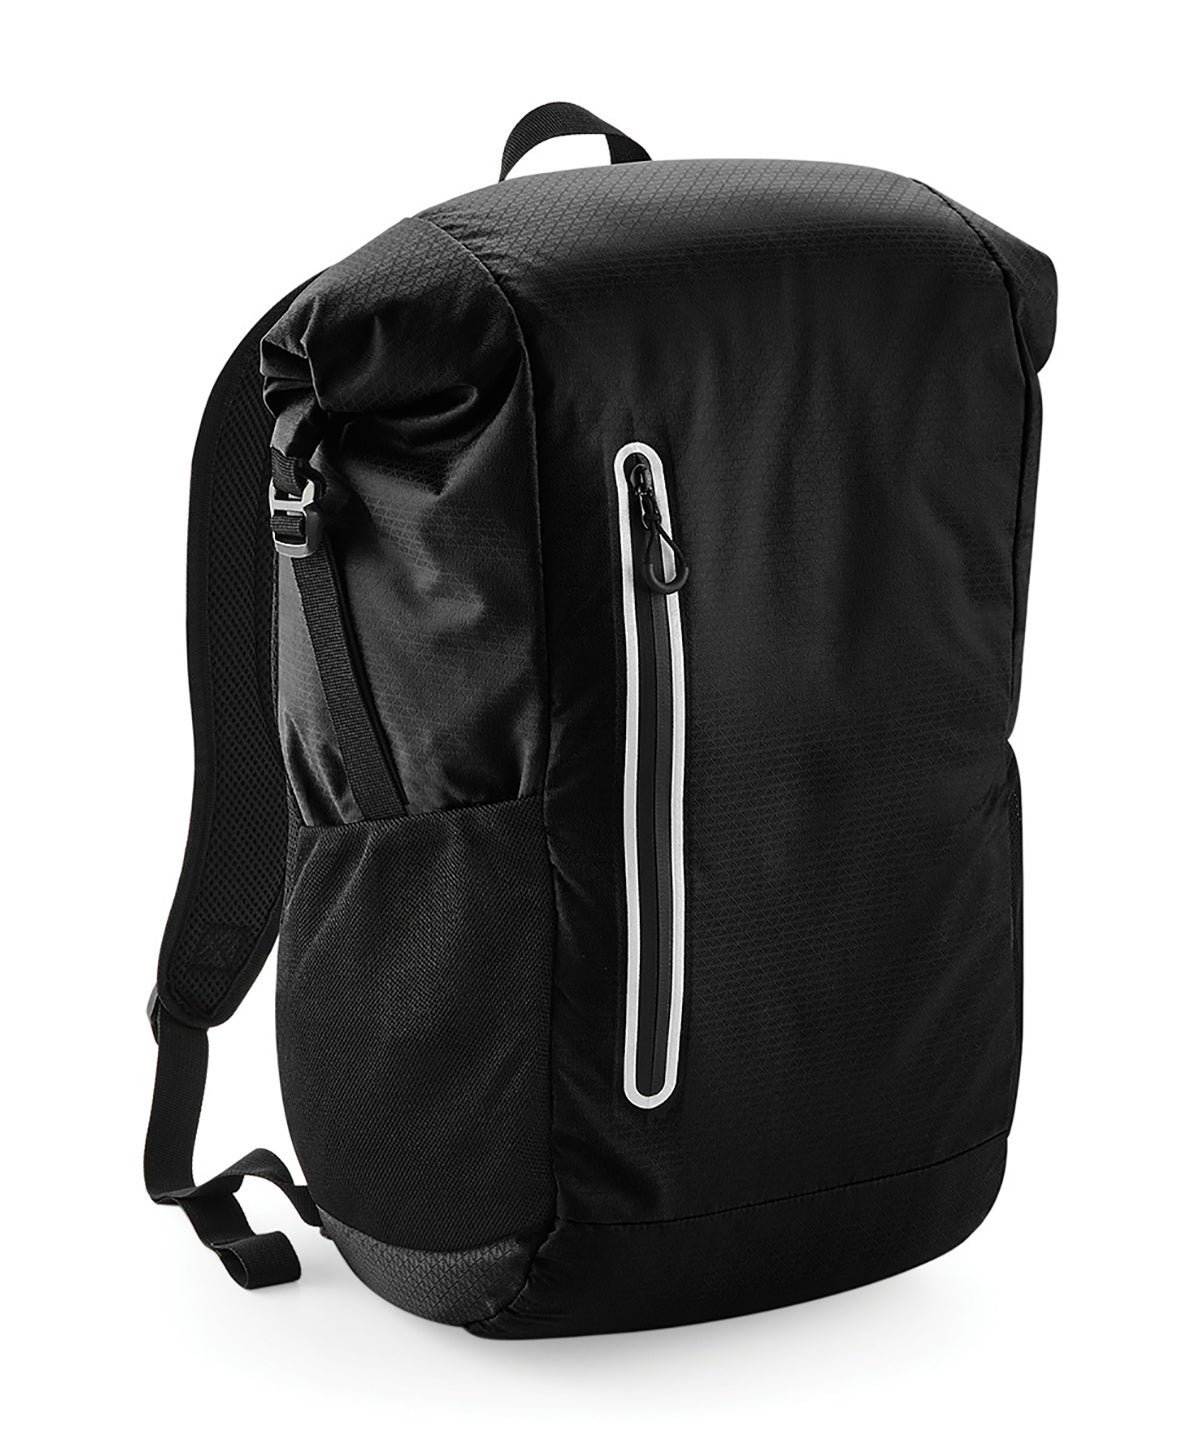 Töskur - Ath-tech Roll-top Backpack